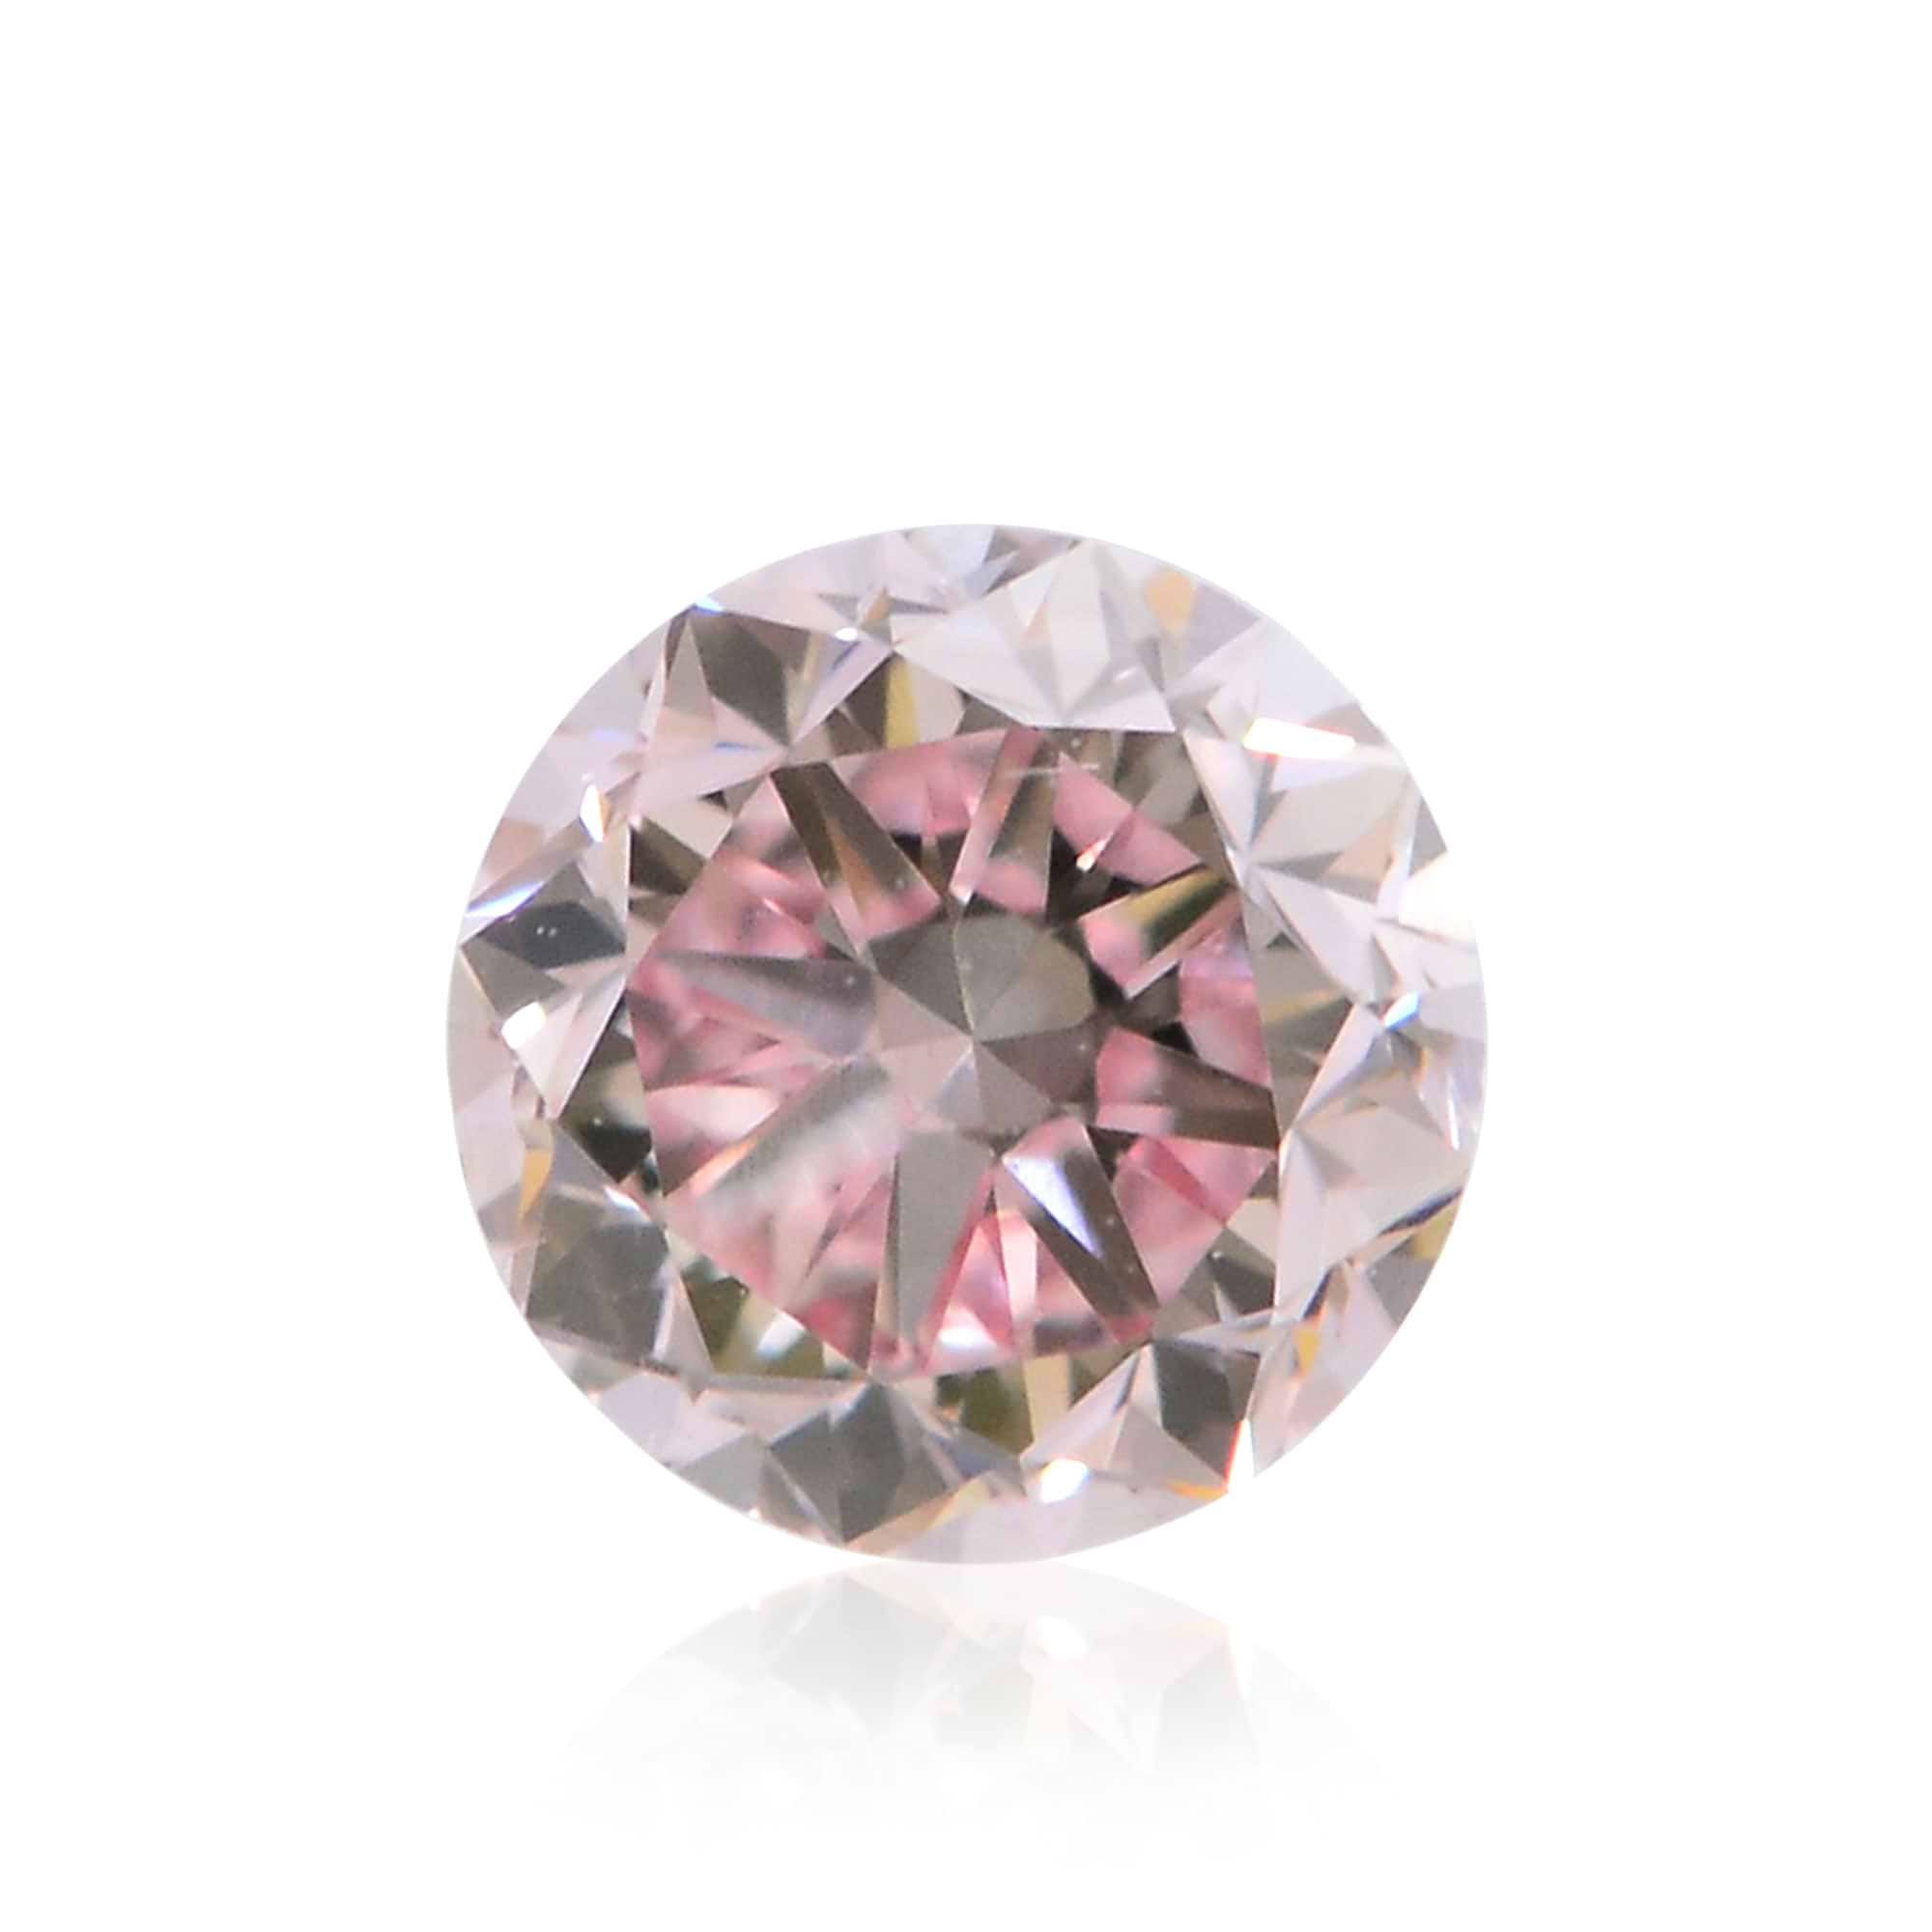 LEIBISH  0.25 carat, Fancy Pink Diamond, 8PR, Round Shape, VVS2 Clarity, ARGYLE & GIA